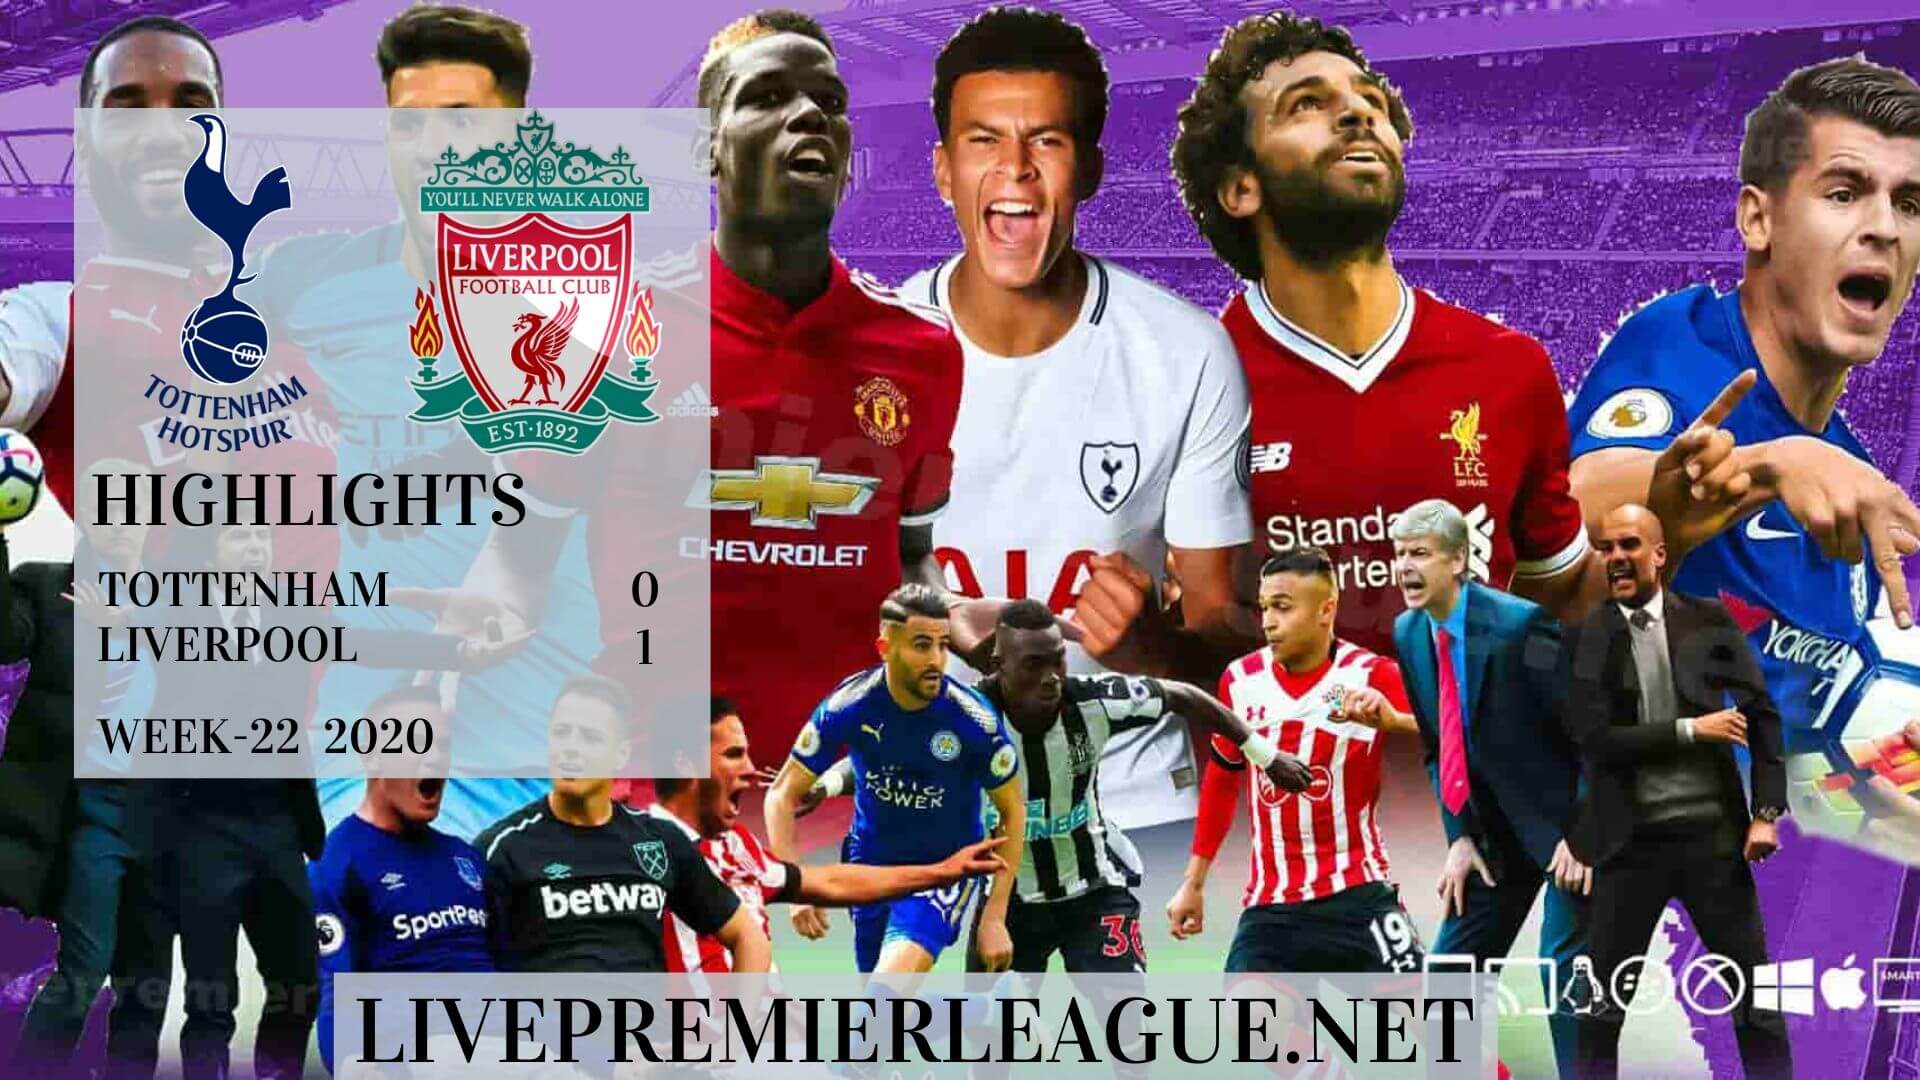 Tottenham Hotspur Vs Liverpool Highlights 2020 Week 22